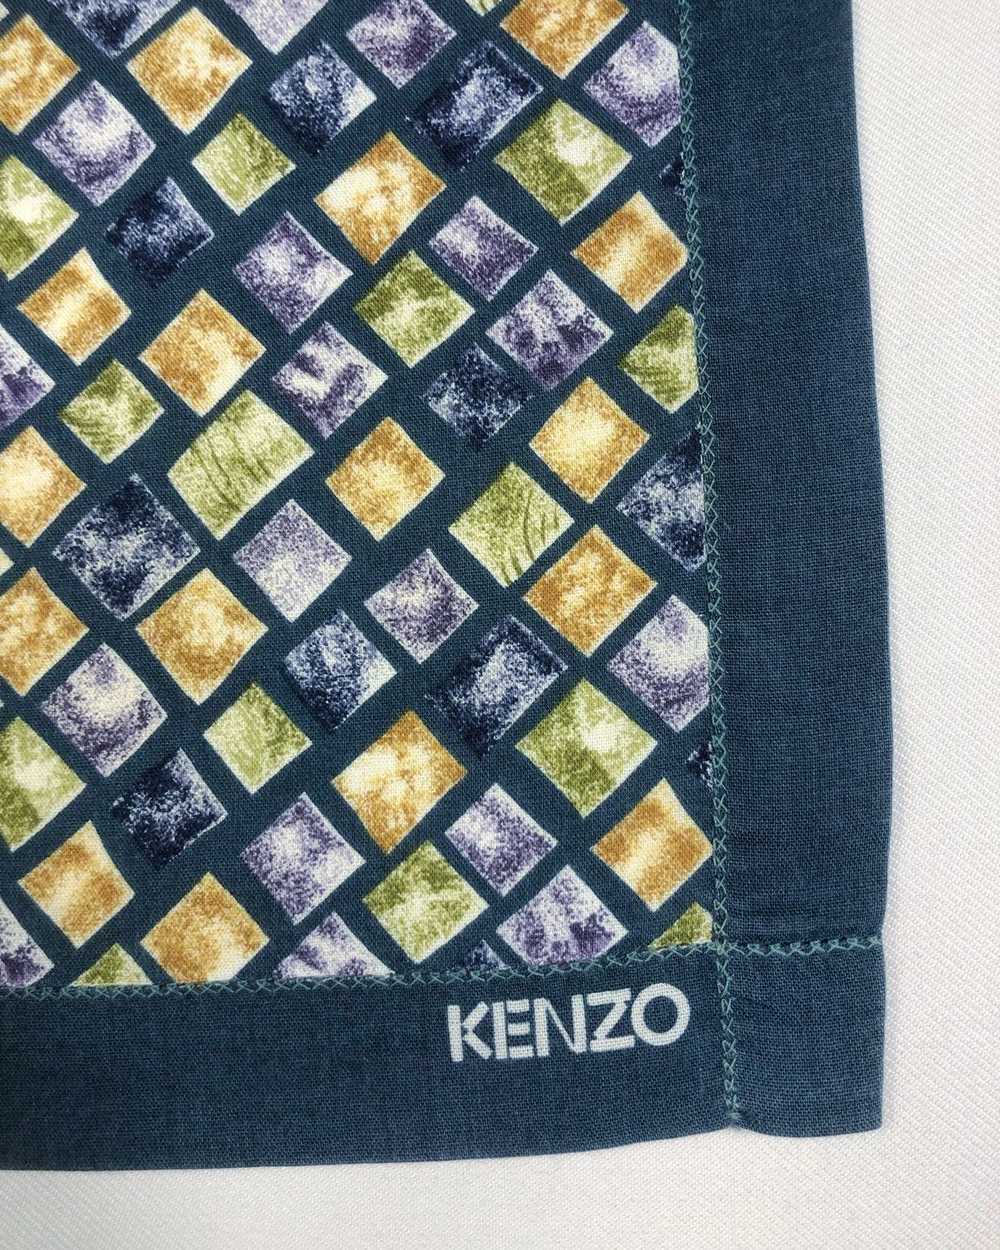 Kenzo Rare Kenzo Bandana Handkerchief - image 3